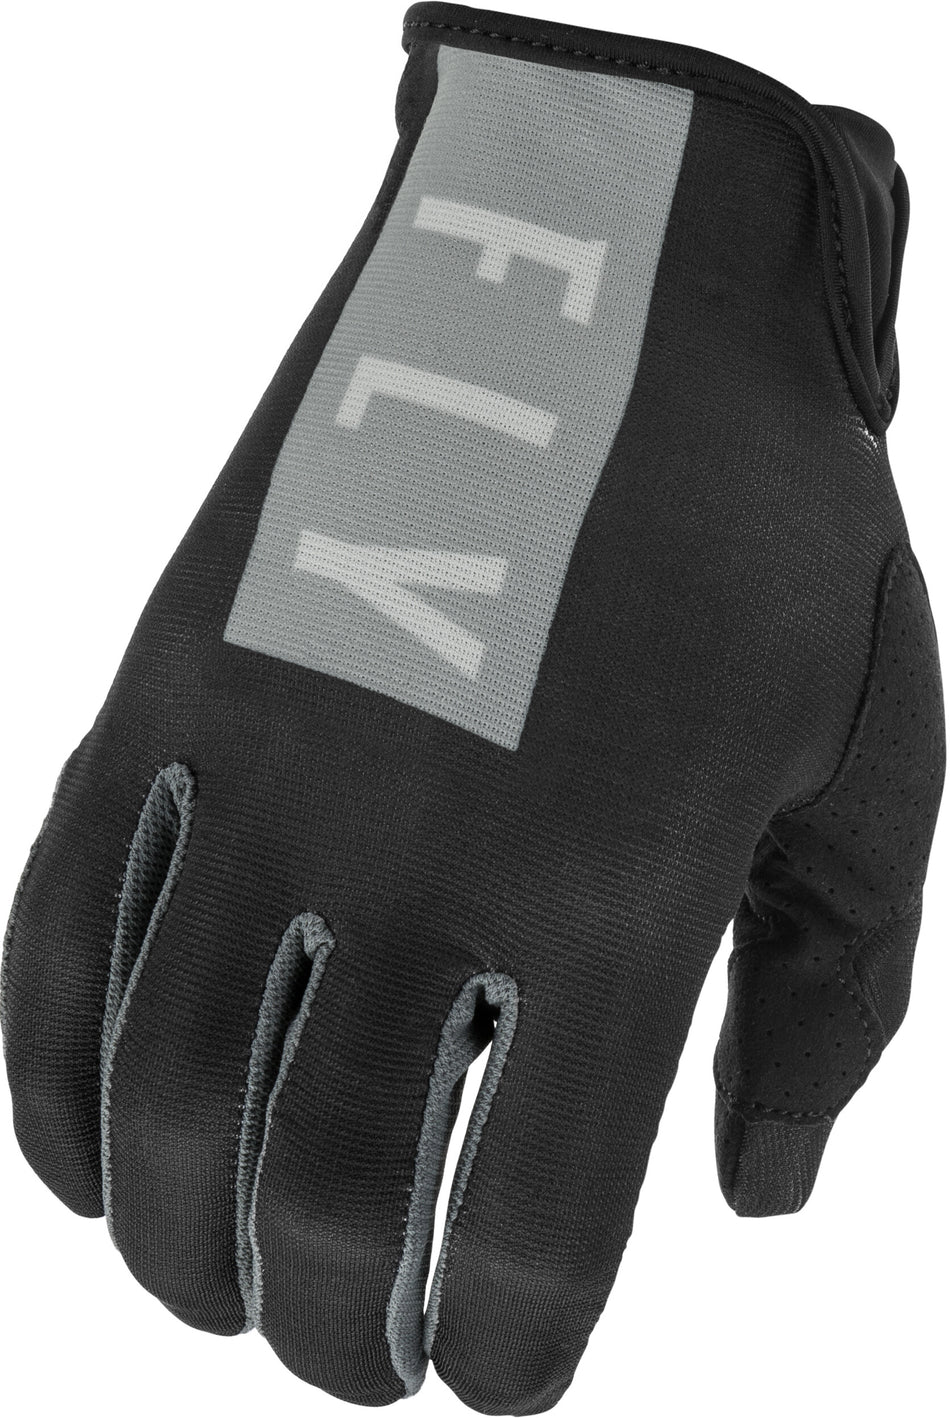 FLY RACING Women's Lite Gloves Black/Grey Sz 07 374-61007